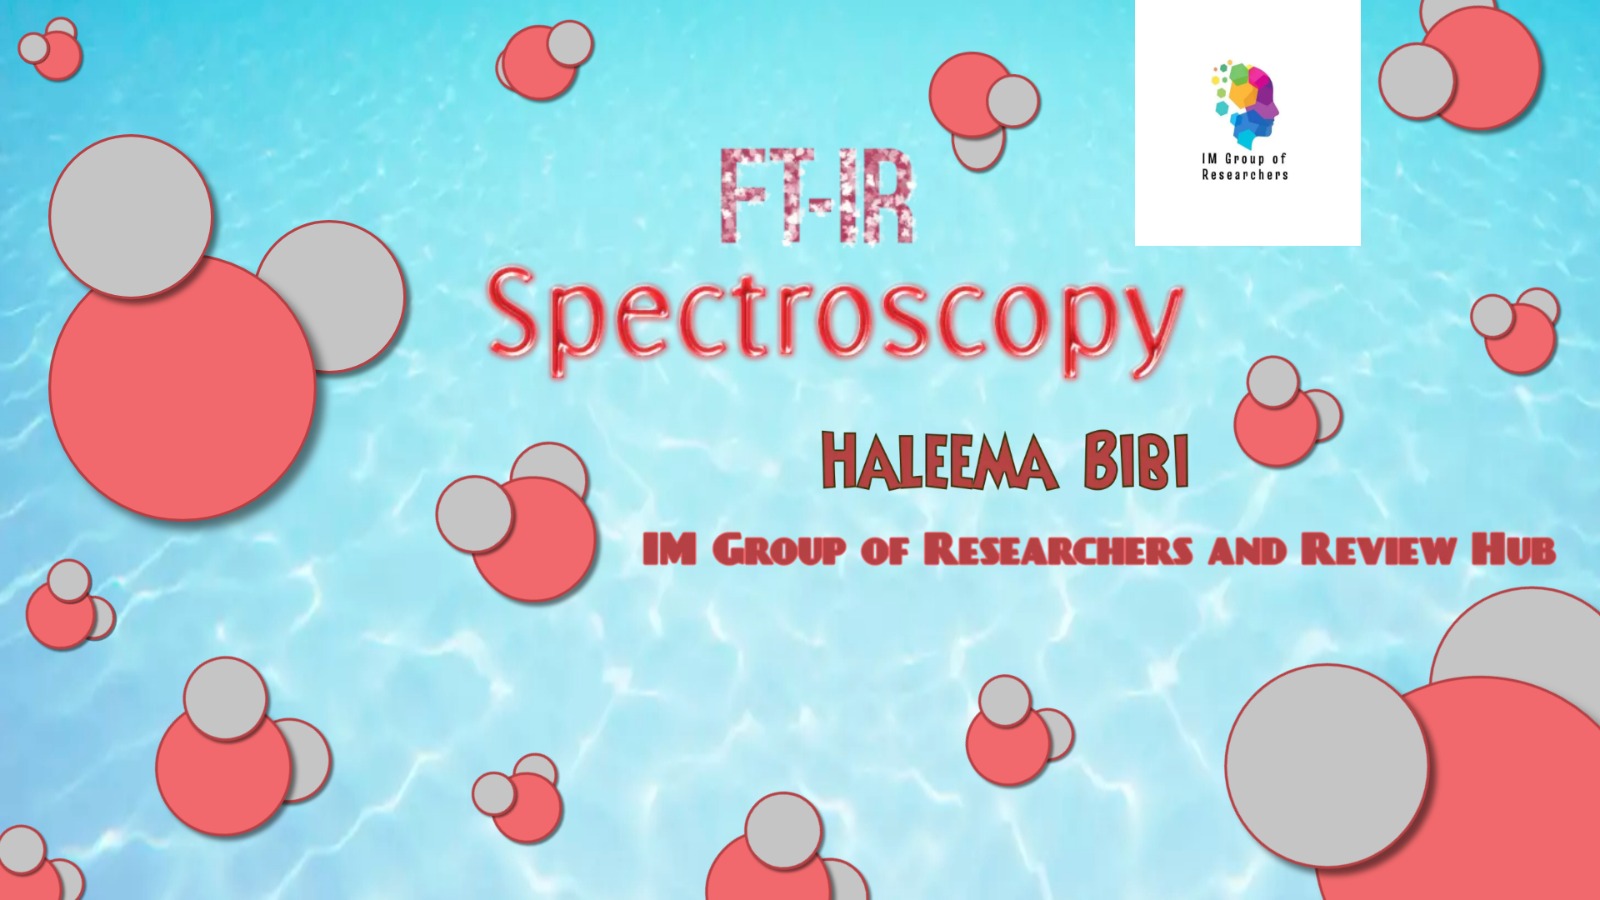 FT-IR SPECTROSCOPY